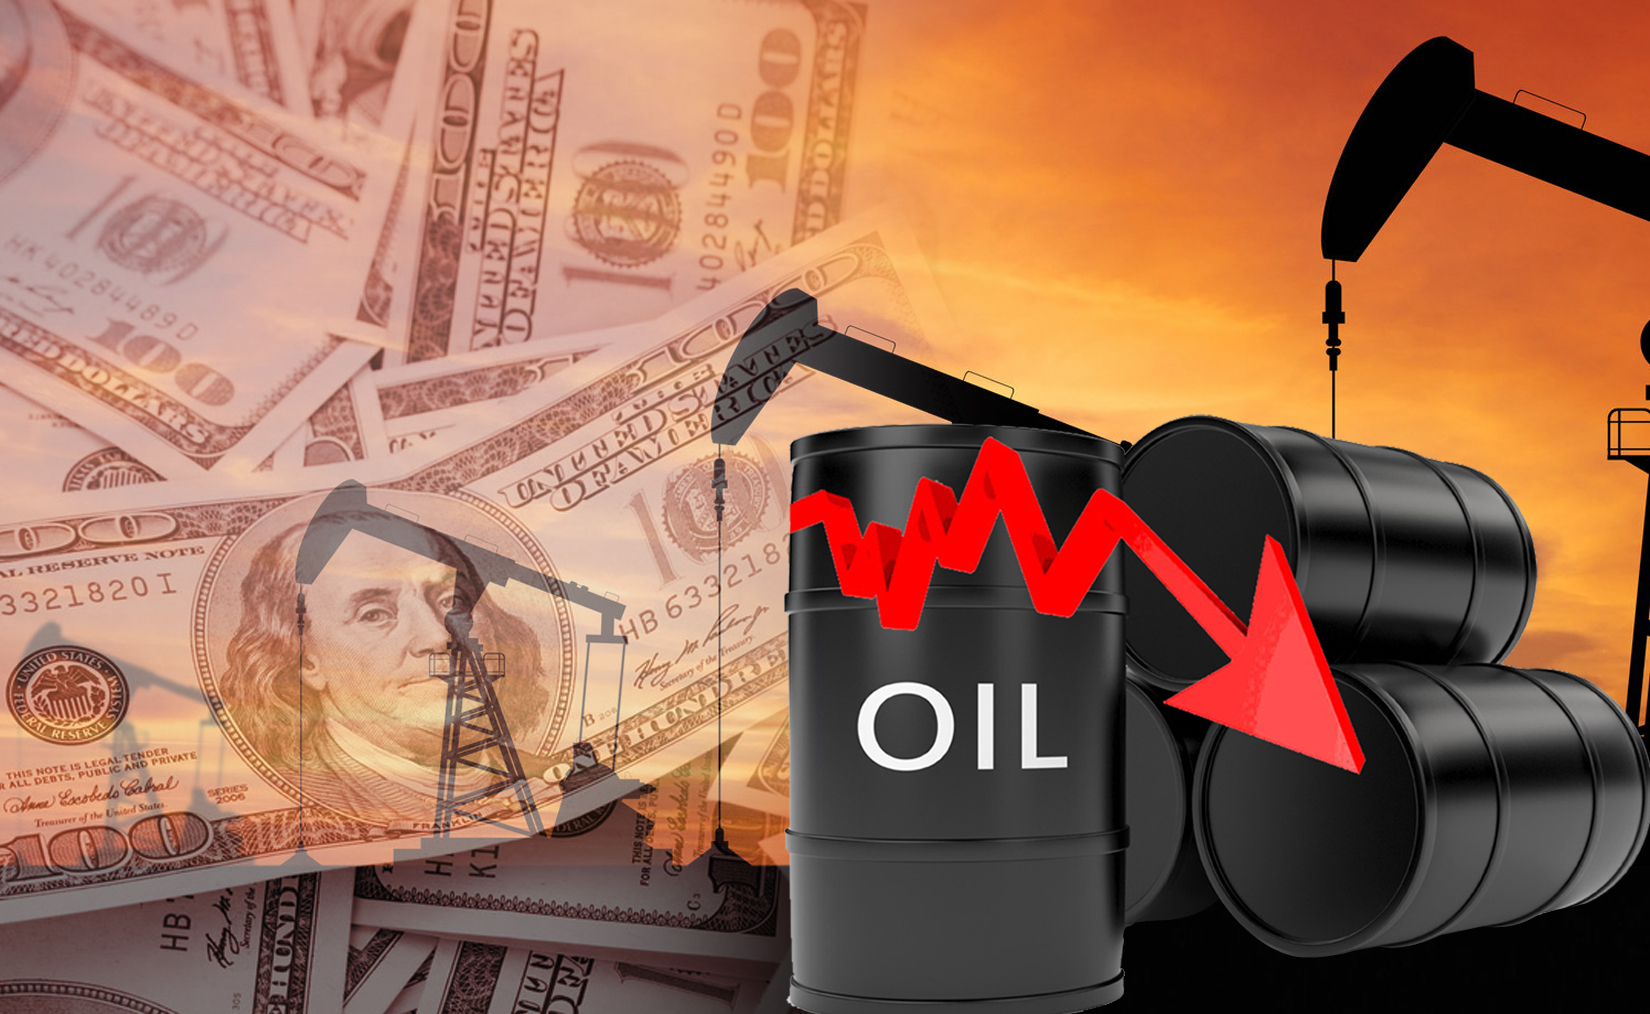 Kuwait oil price down 98 cents to USD 62.49 pb                                                                                                                                                                                                            